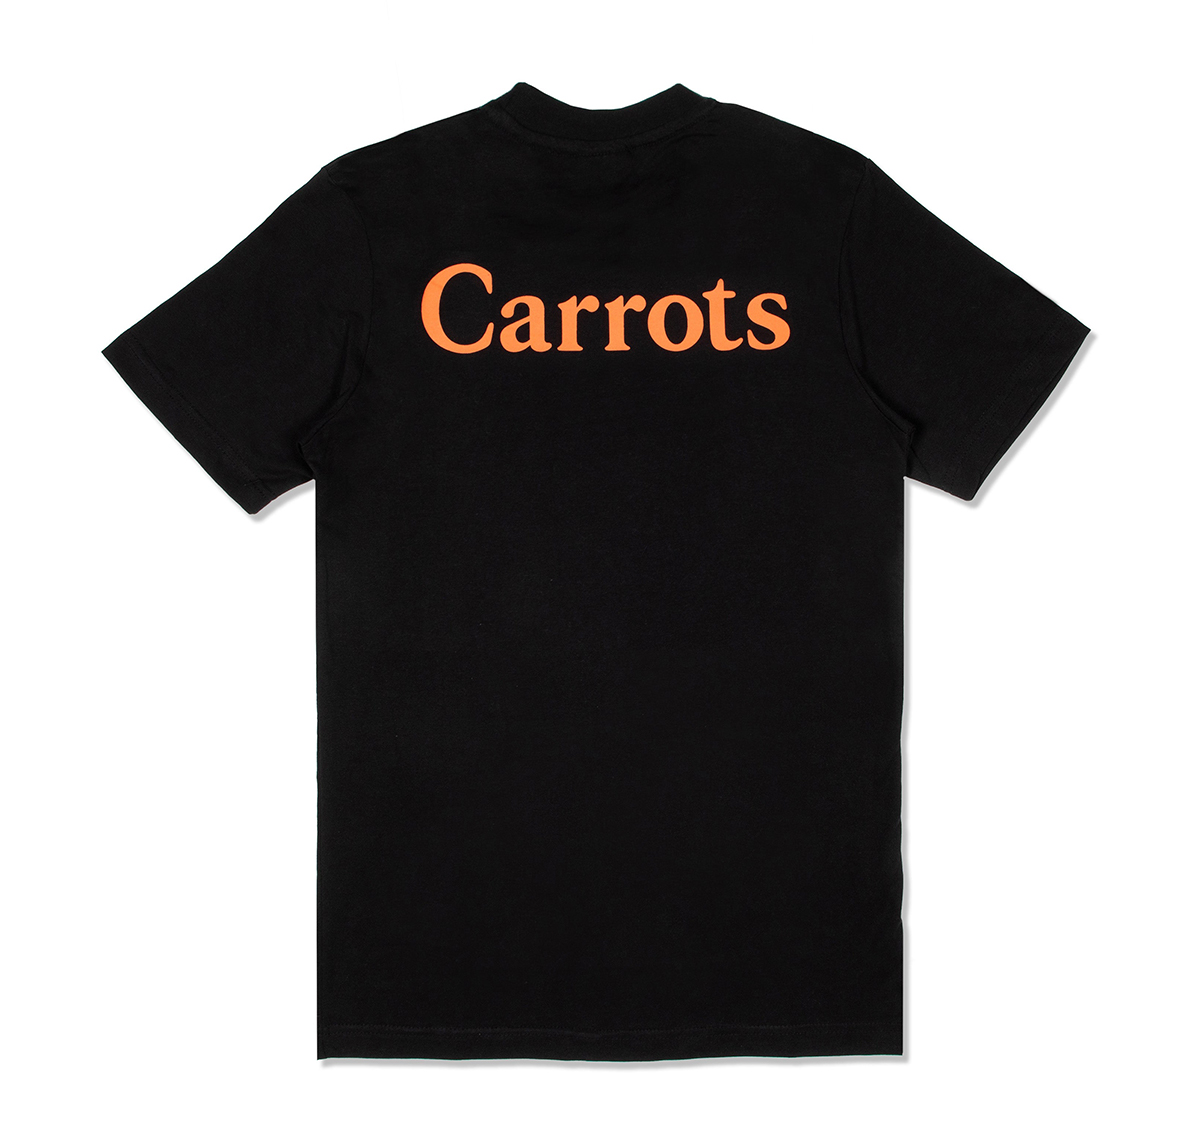 Carrots Wordmark Tee - Black - Back